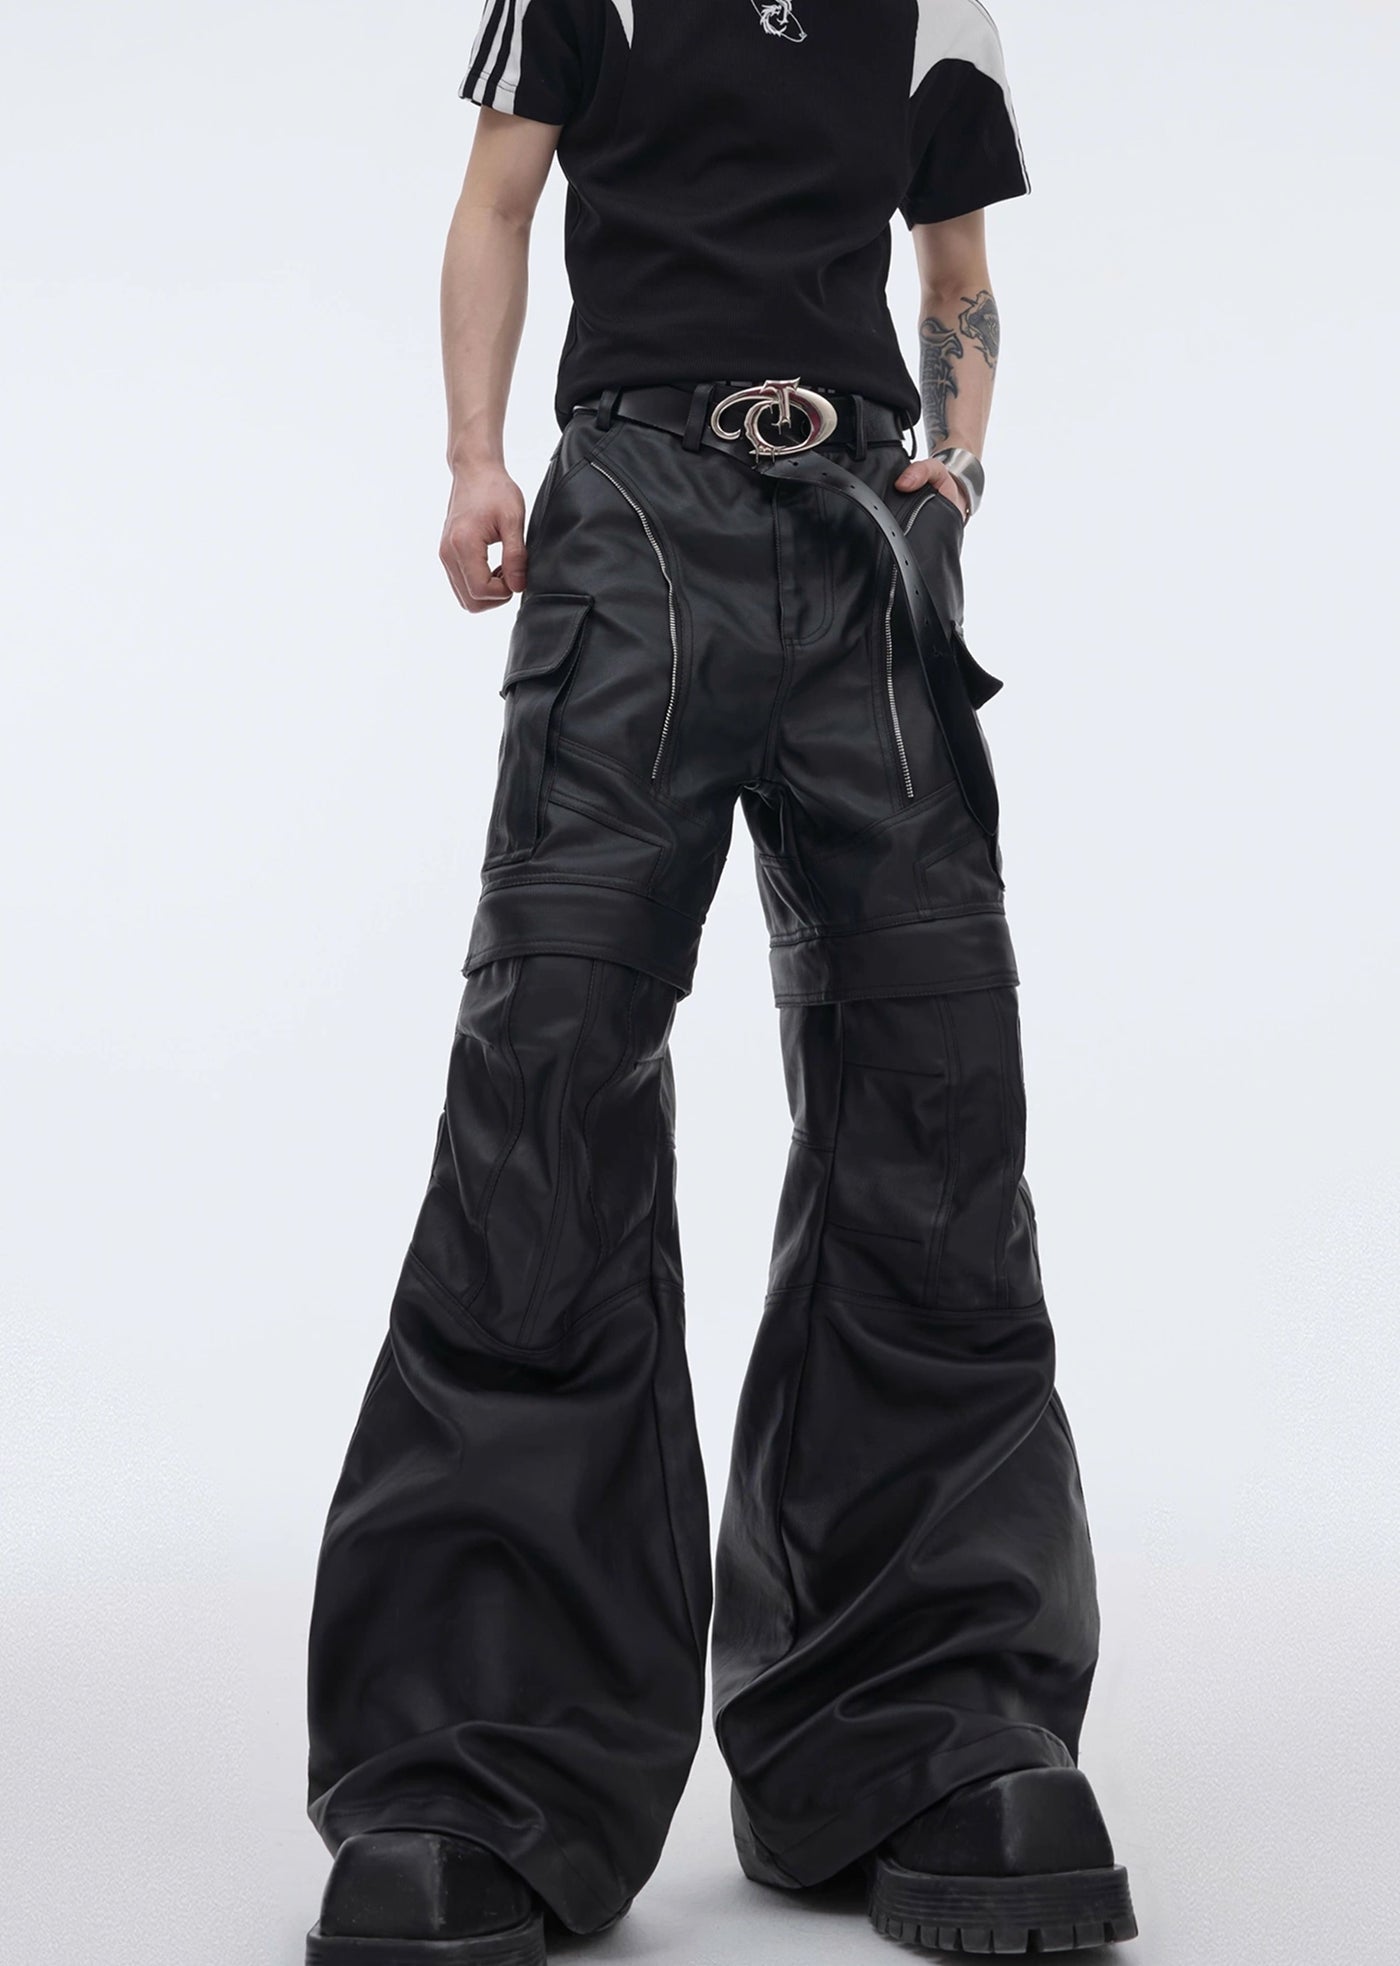 【Culture E】Knee cut gimmick design black ankle leather wide pants  CE0122